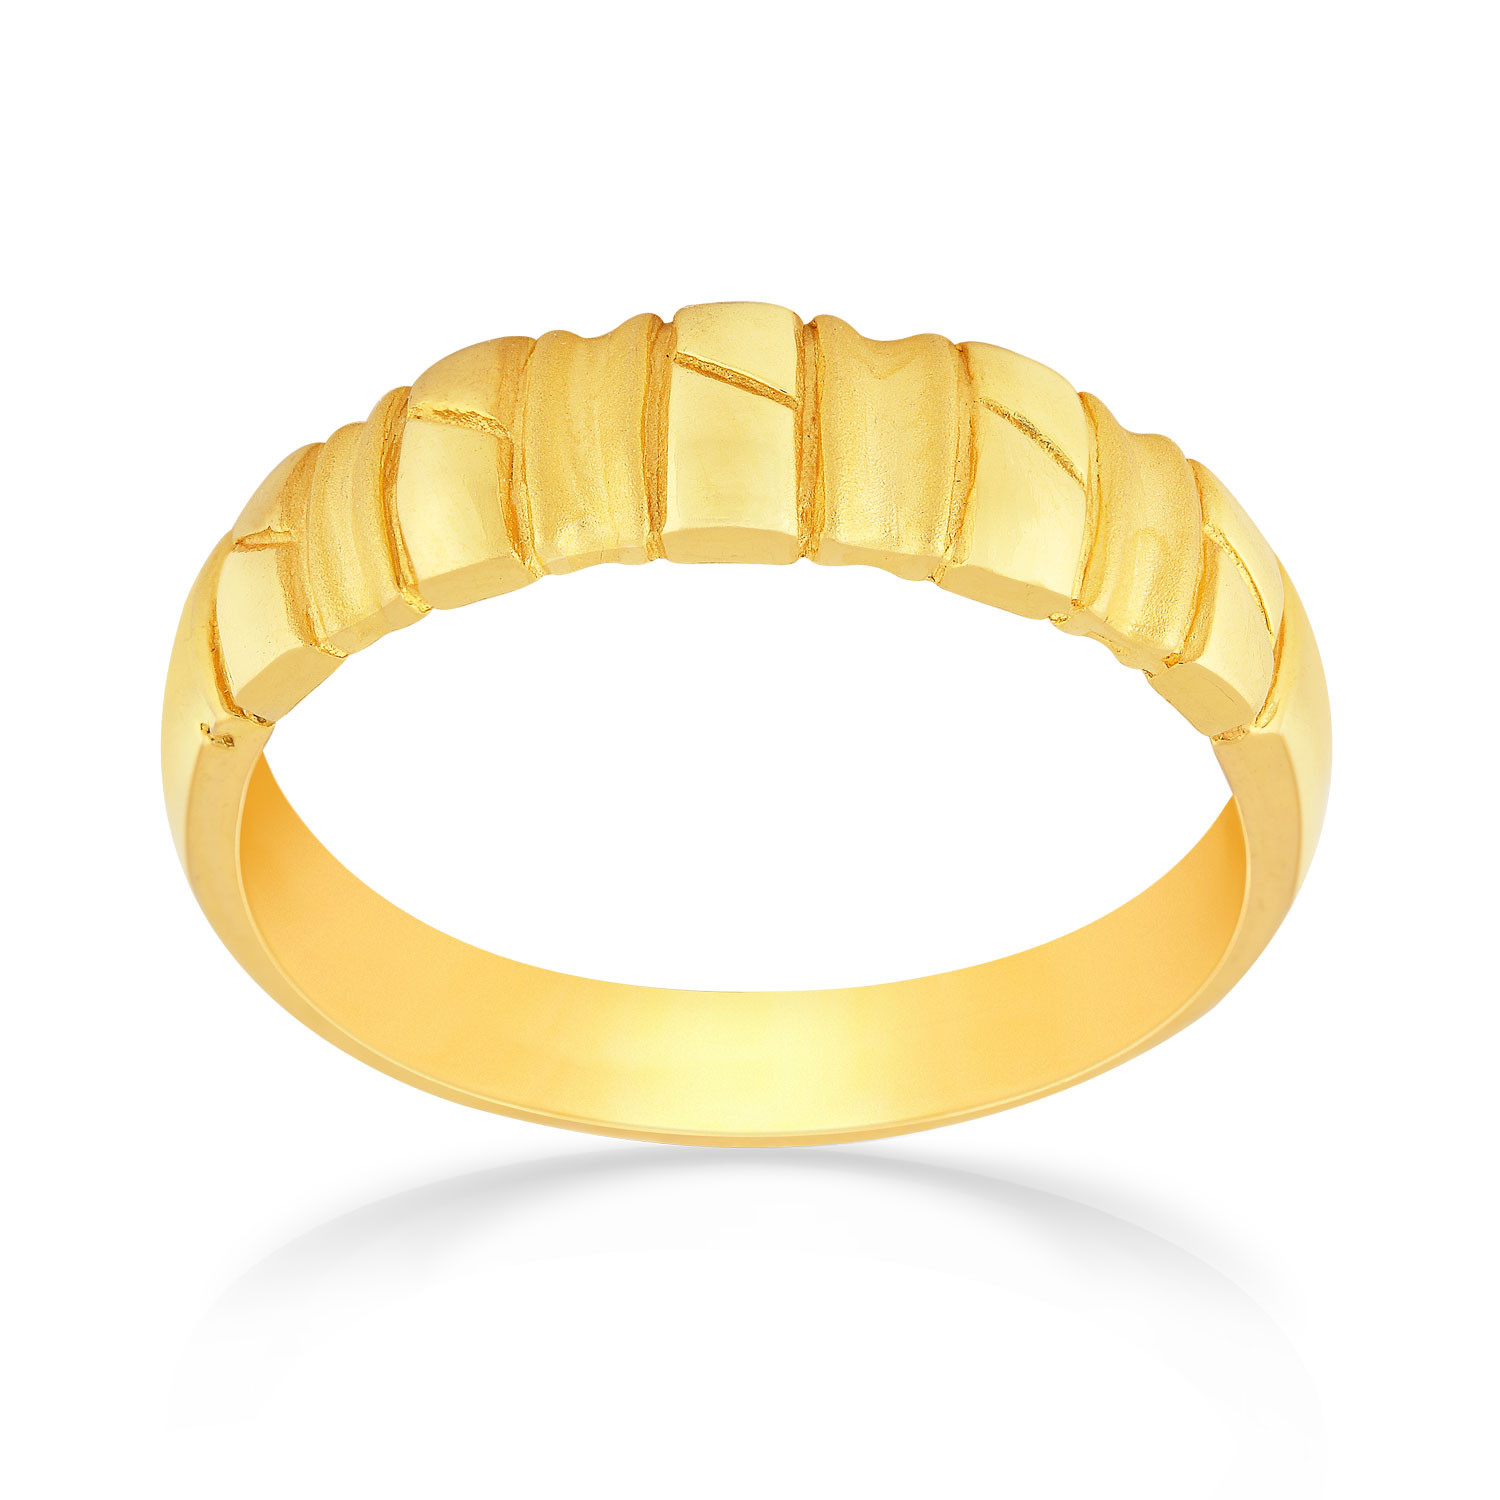 Under 20K😳 Malabar Gold Ring Designs With Price| Light Weight Gold Ring  Designs With Price 2023 - YouTube